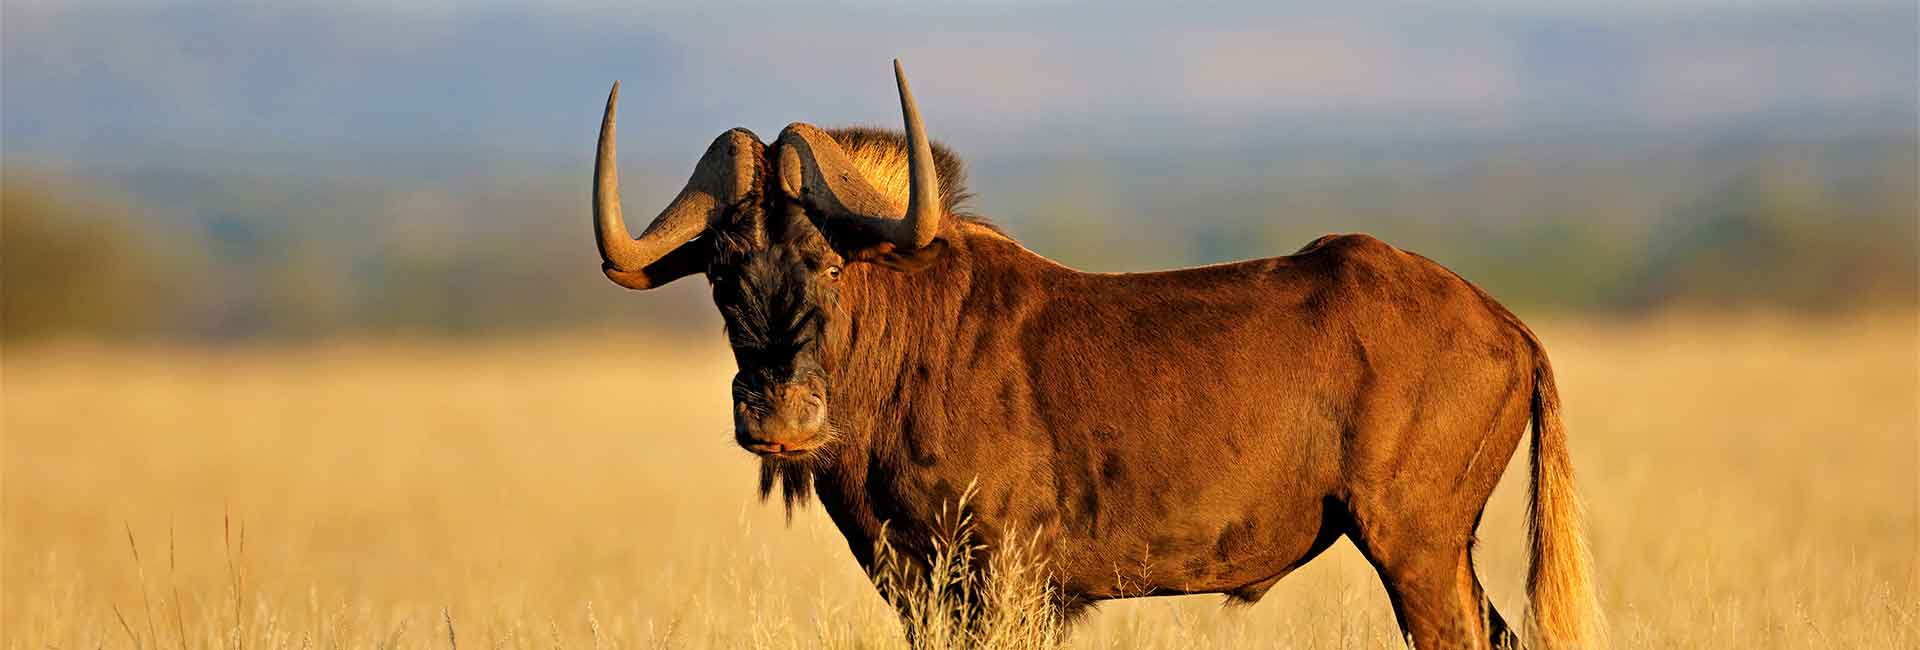 wildebeest-hunting-somerby-safaris-banner